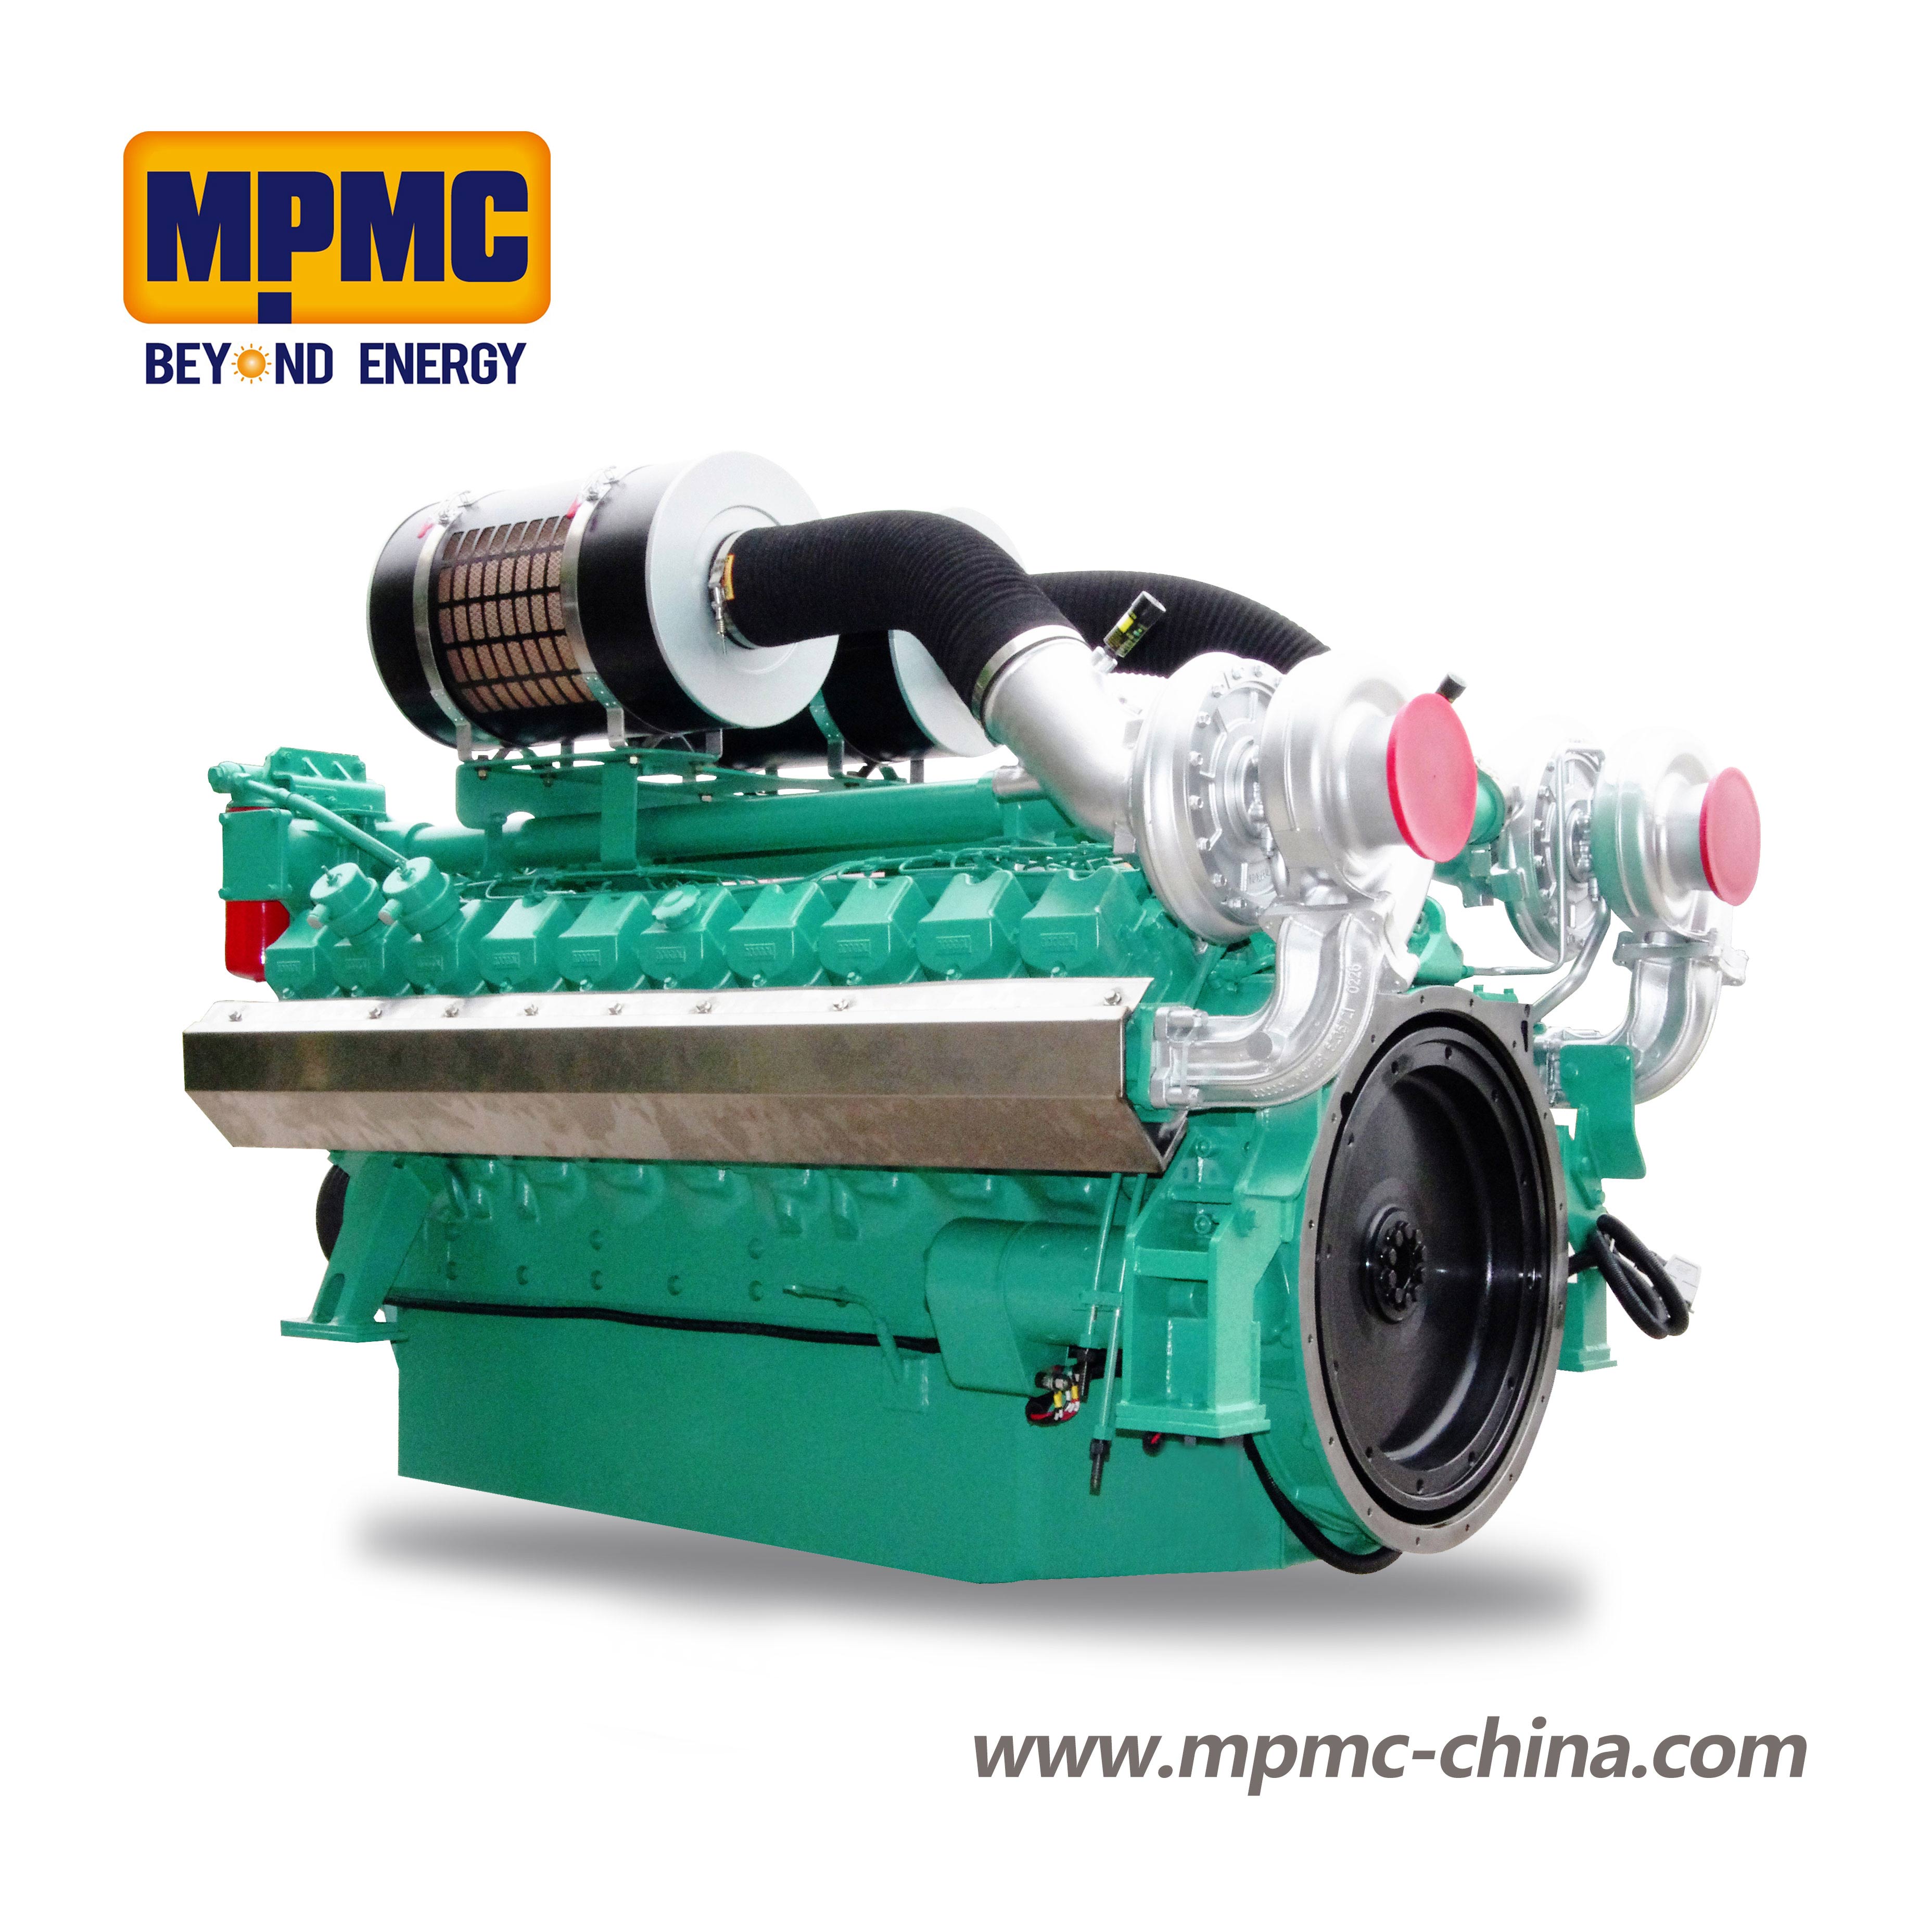 MPMC发动机 Made By MPMC